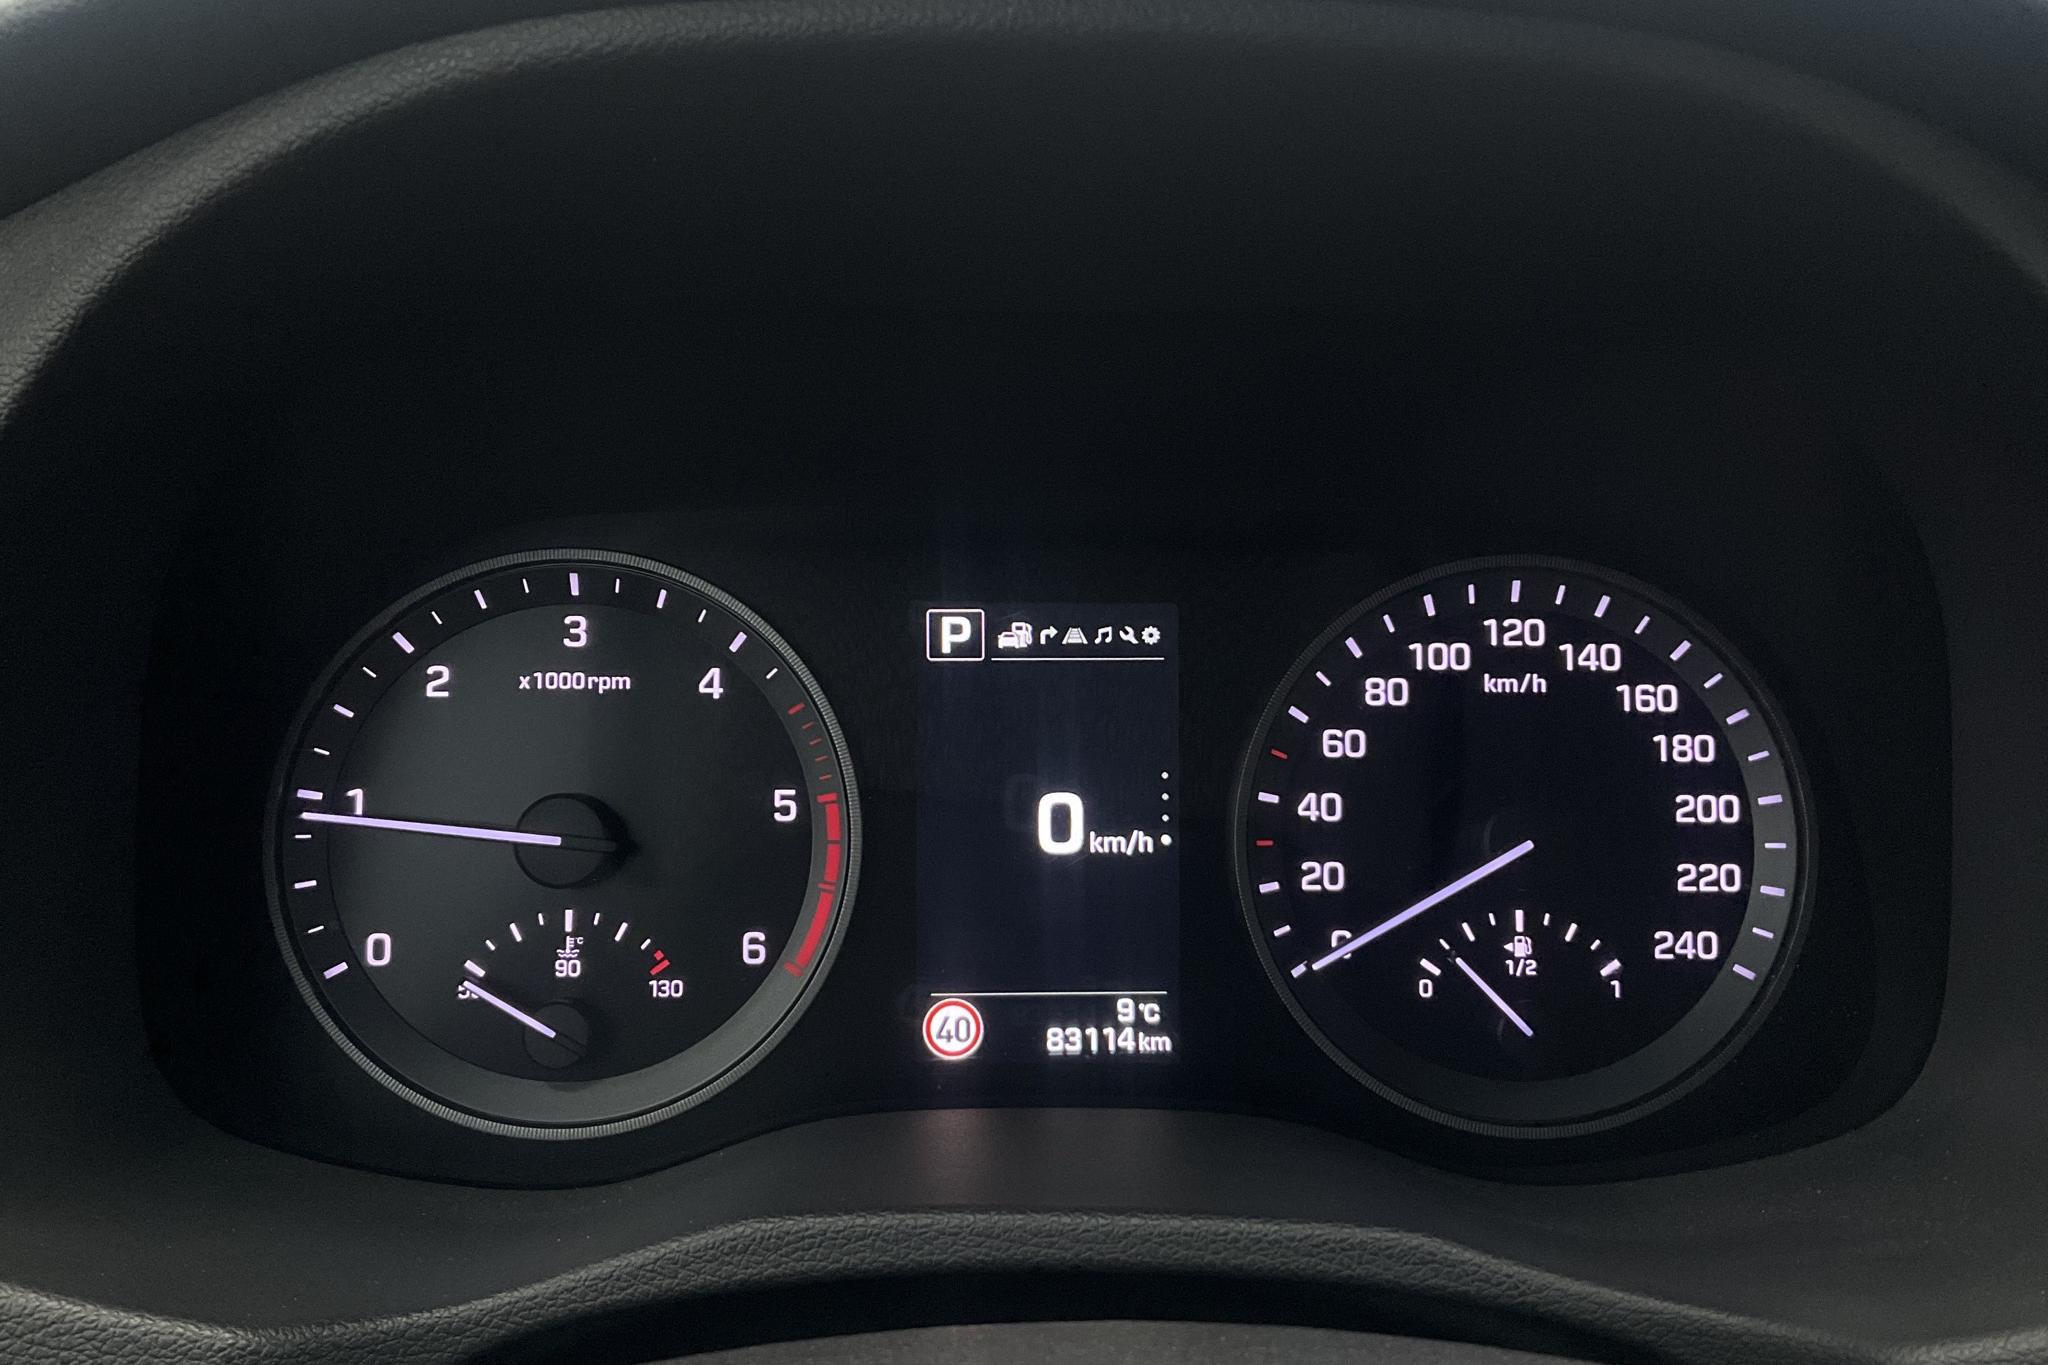 Hyundai Tucson 2.0 D 4WD (136hk) - 83 080 km - Automatic - Light Blue - 2017